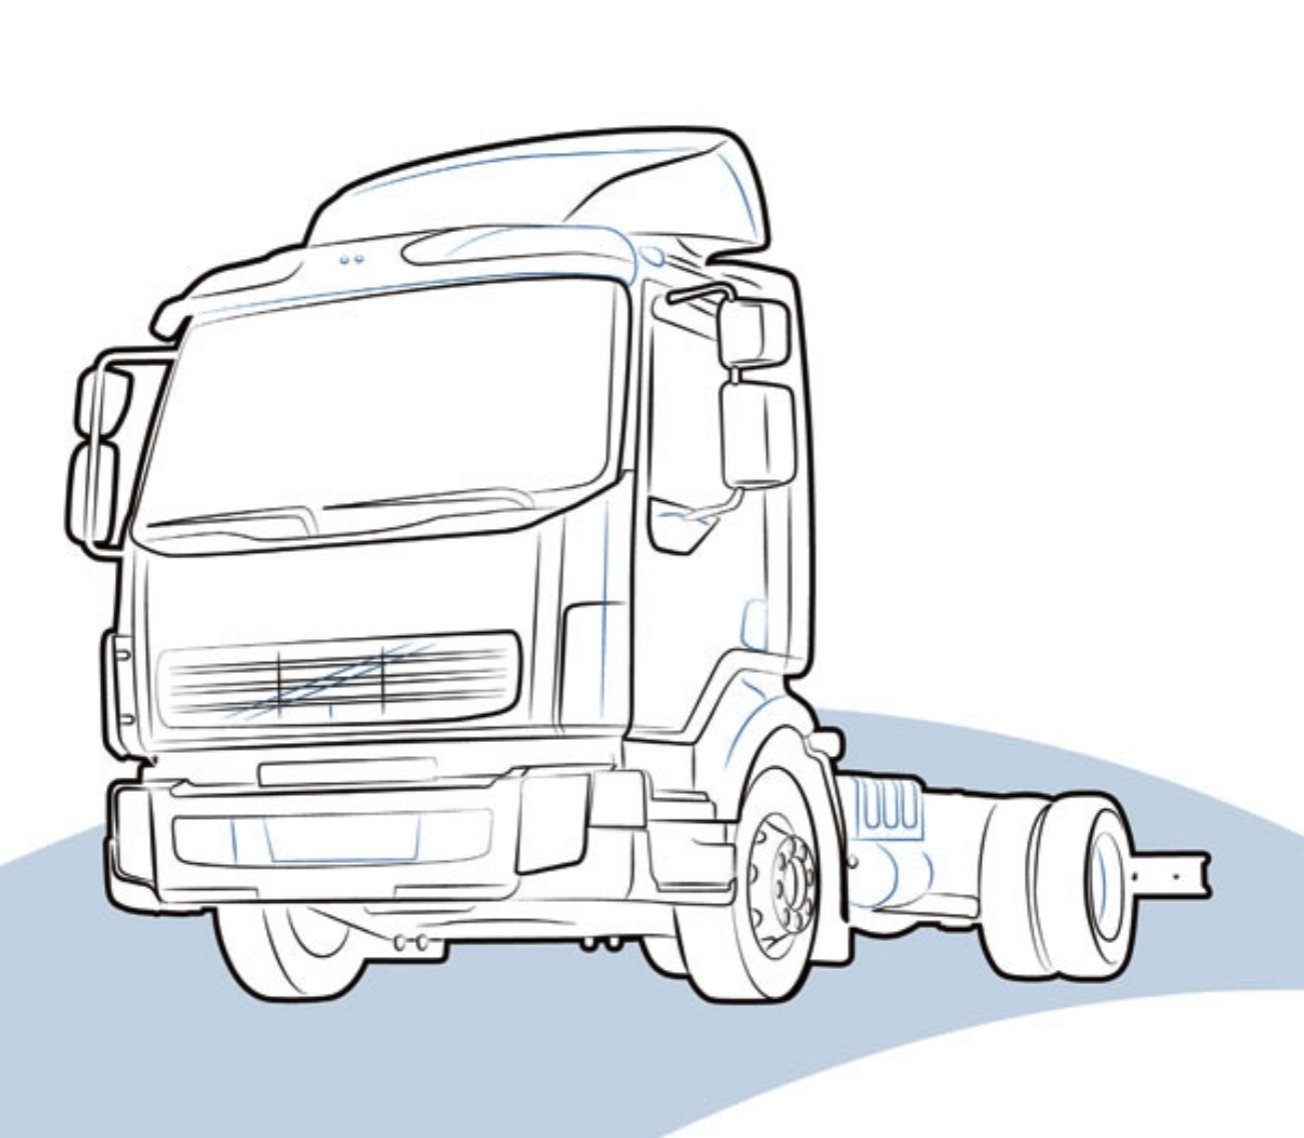 FANALE POSTERIORE DX DAF LF - 5001870556 - Carrozzeria Truck